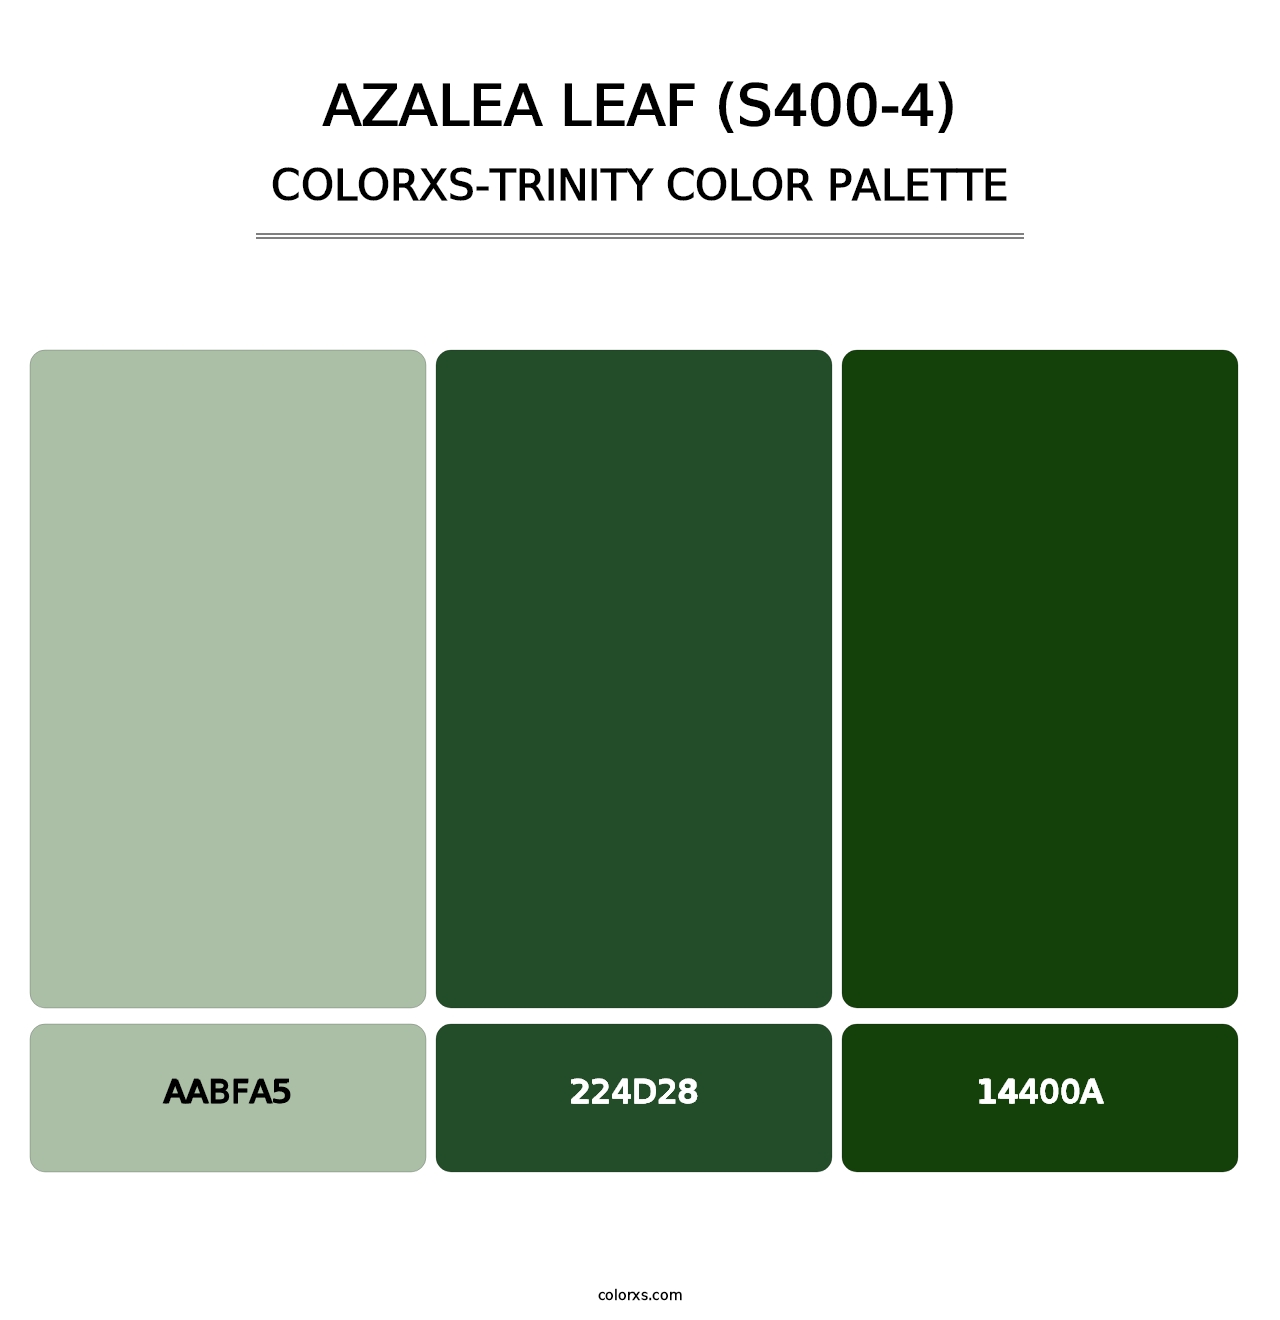 Azalea Leaf (S400-4) - Colorxs Trinity Palette